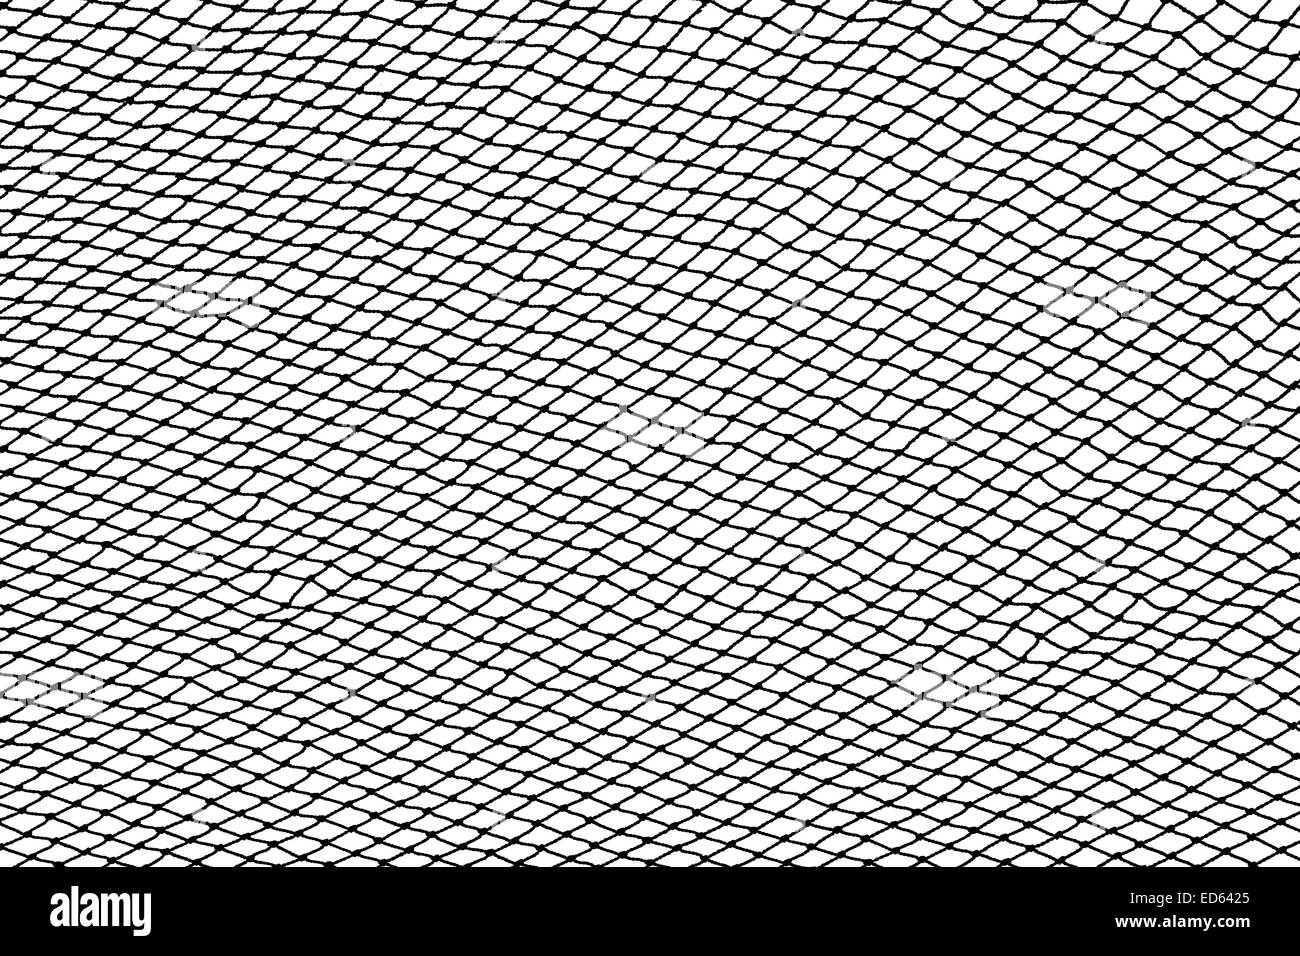 Black fishing net silhouette isolated on white background Stock Photo